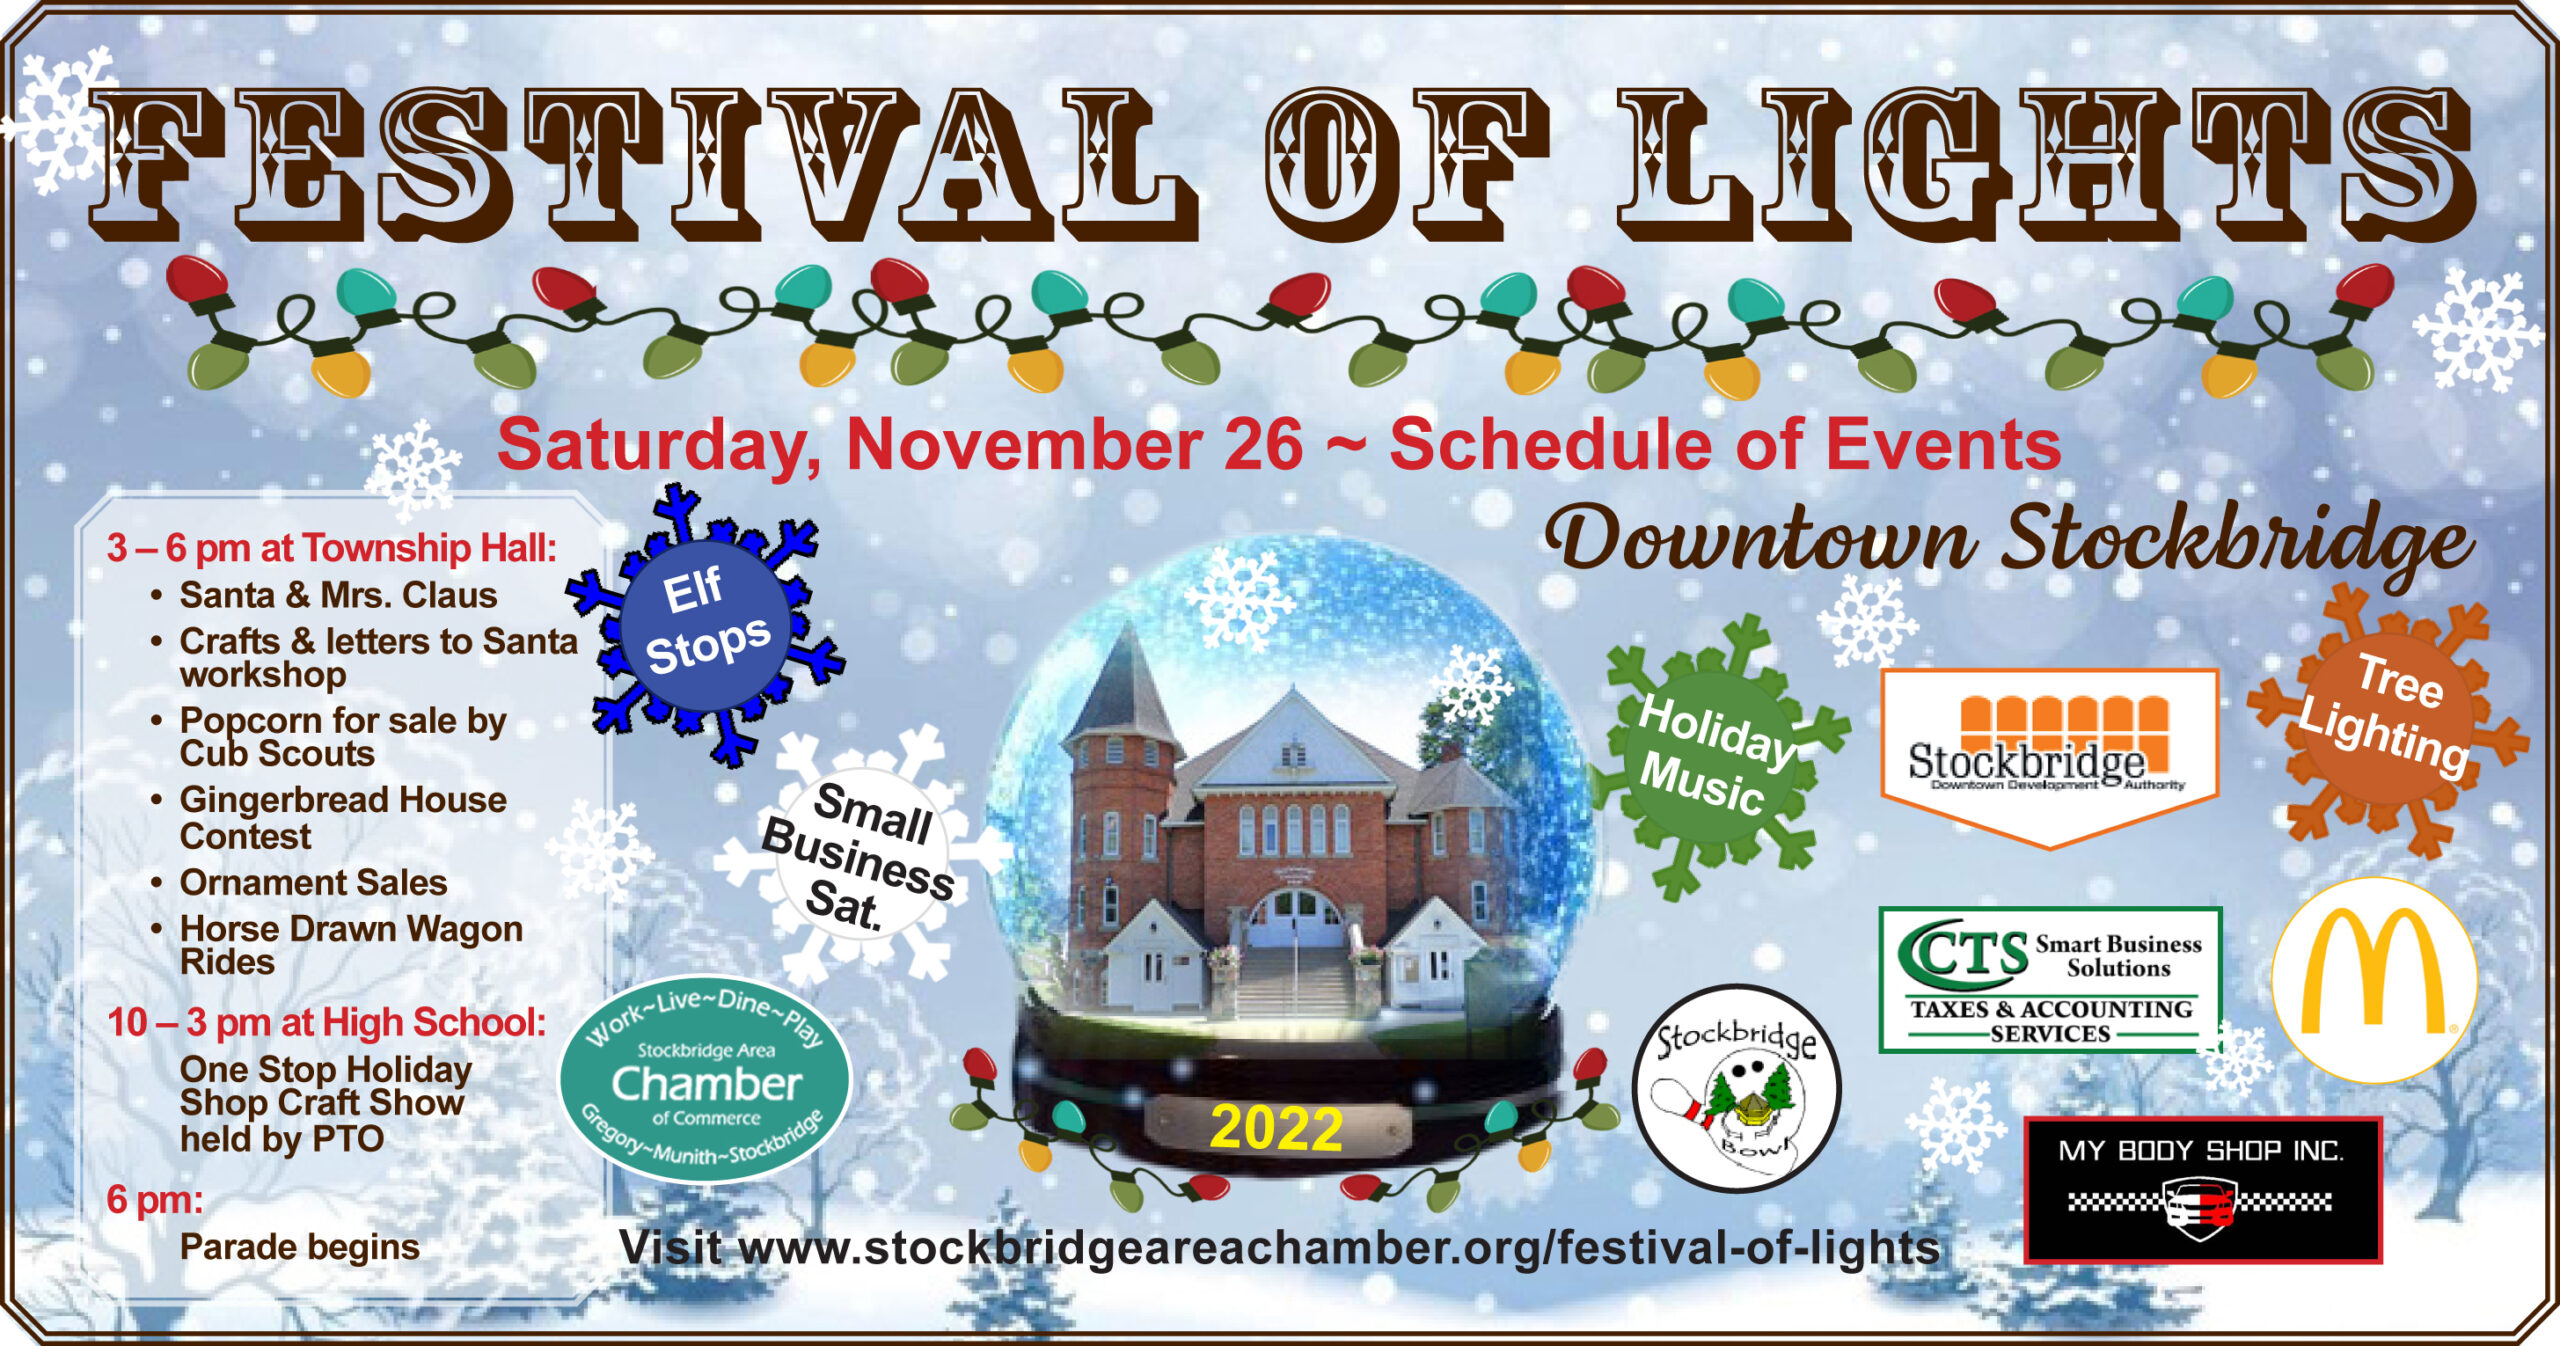 11th Annual Festival of Lights in Downtown Stockbridge Saturday